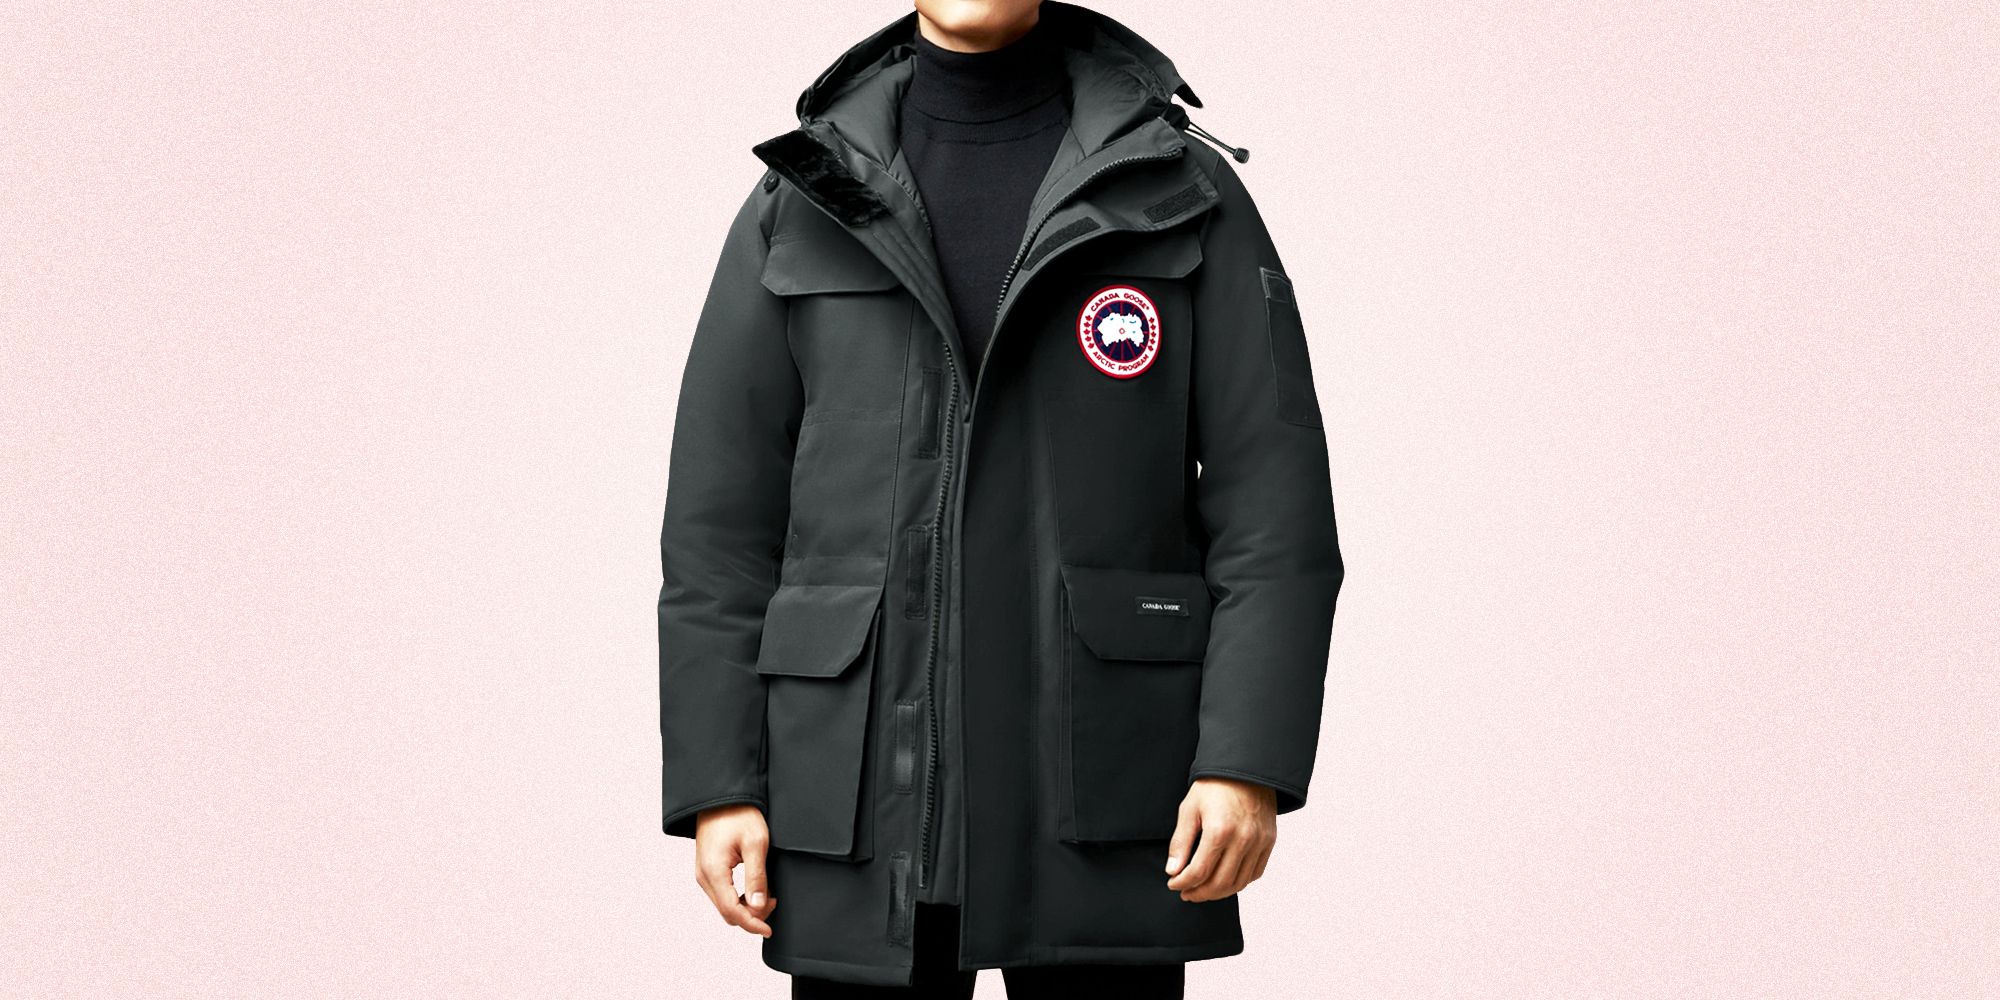 30 Best Winter Coats 2022 - Warmest Men 